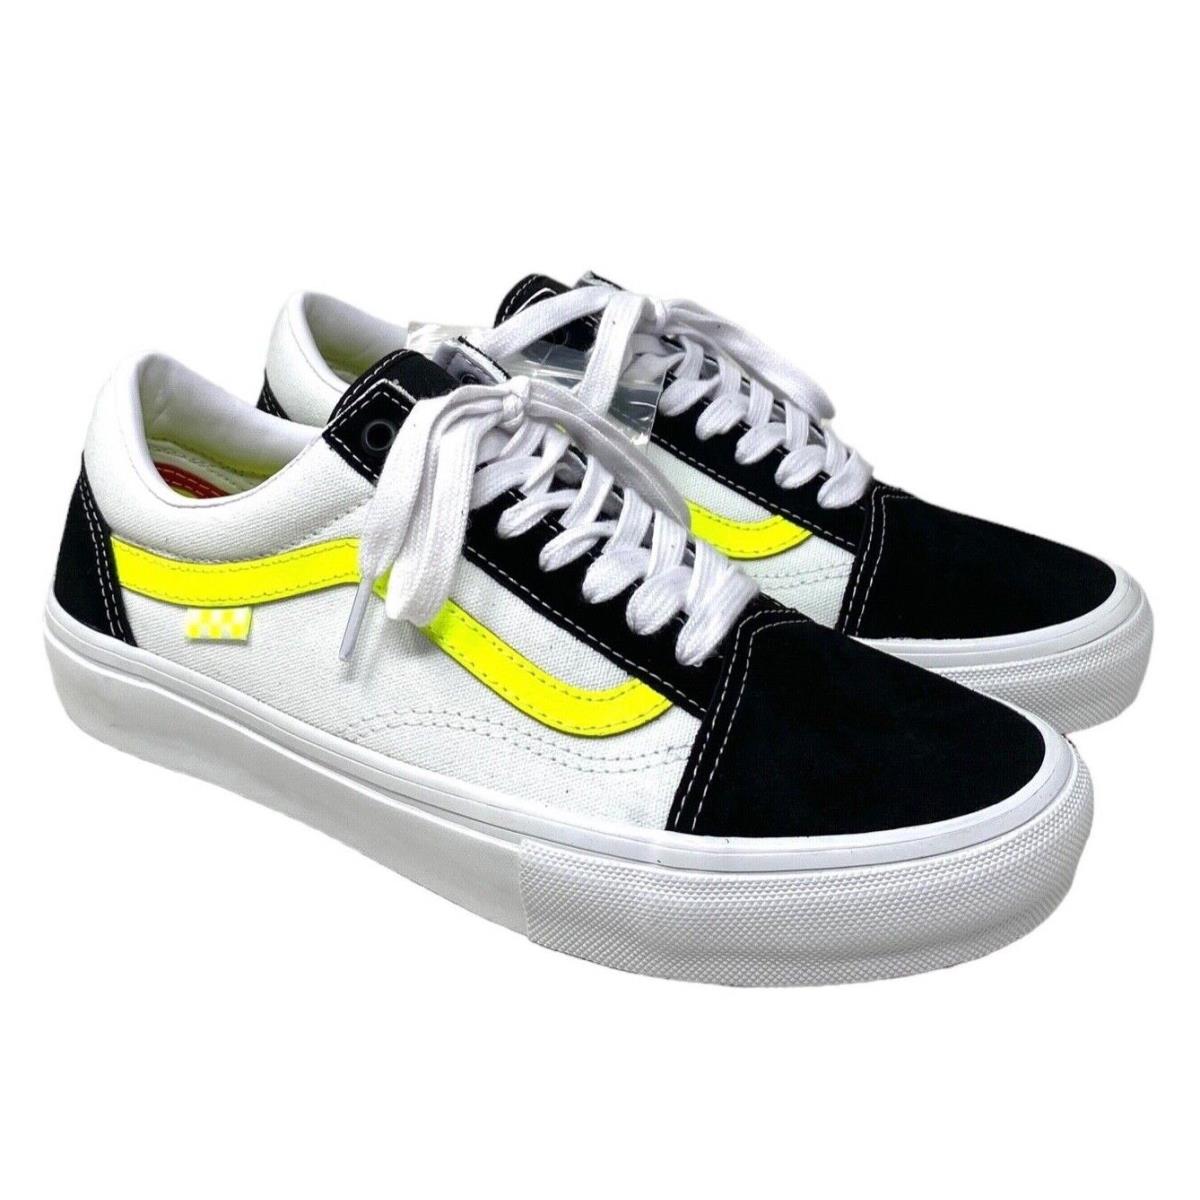 Vans Old Skool Skate Neon Sneakers Suede Canvas Black For Men Shoes VN0A5FCB6M5